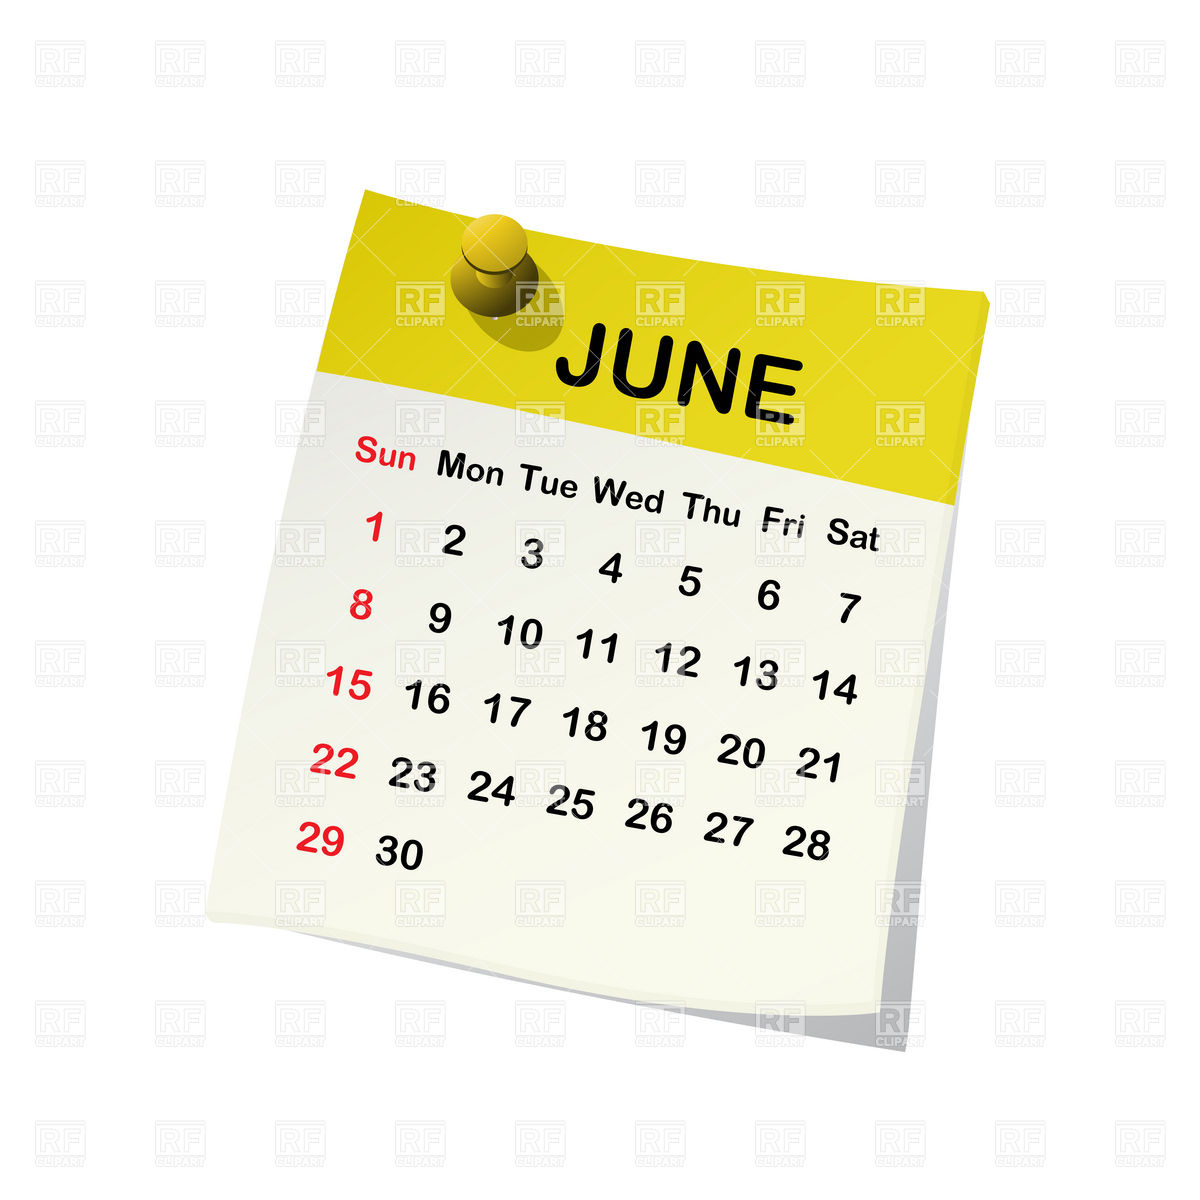 June preschool calendar clipart clipartfox